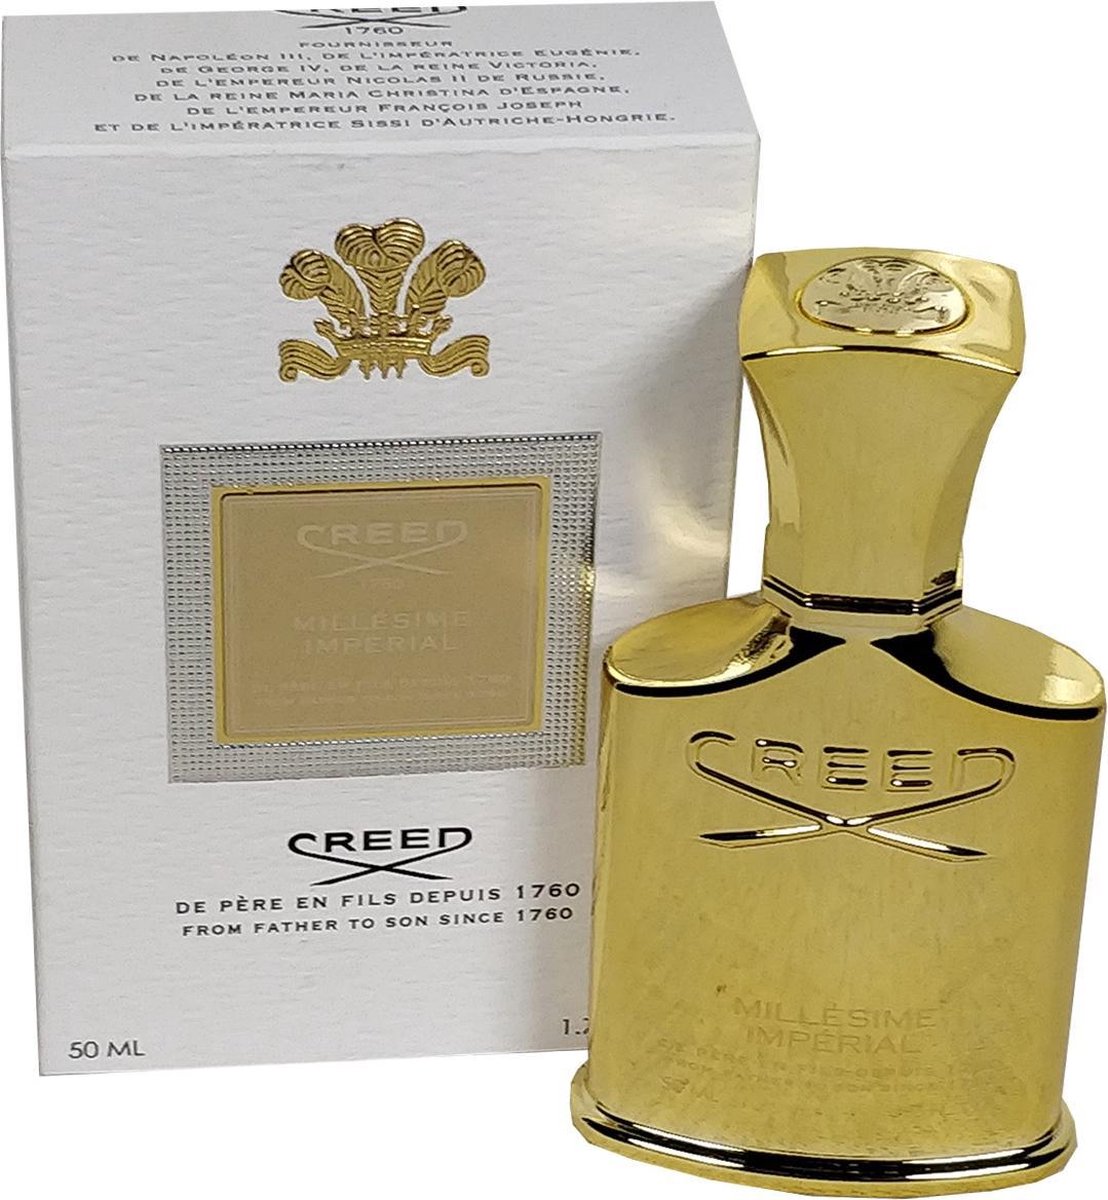 MILLESIME IMPERIAL by Creed 50 ml - Eau De Parfum Spray